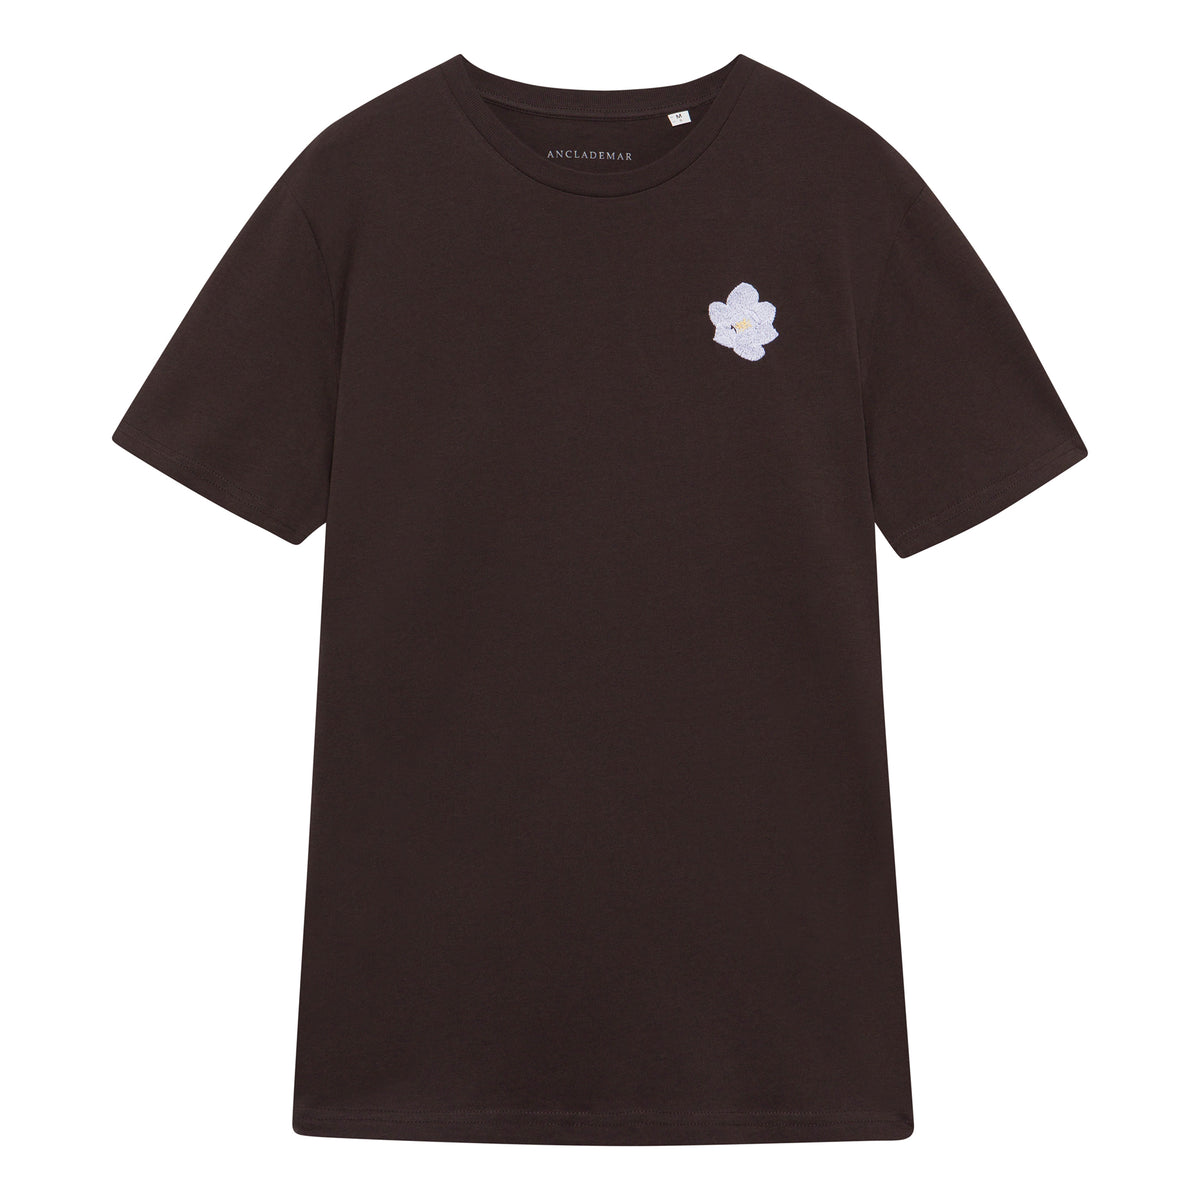 Camiseta Marrón Magnolia. Tallas XS, S